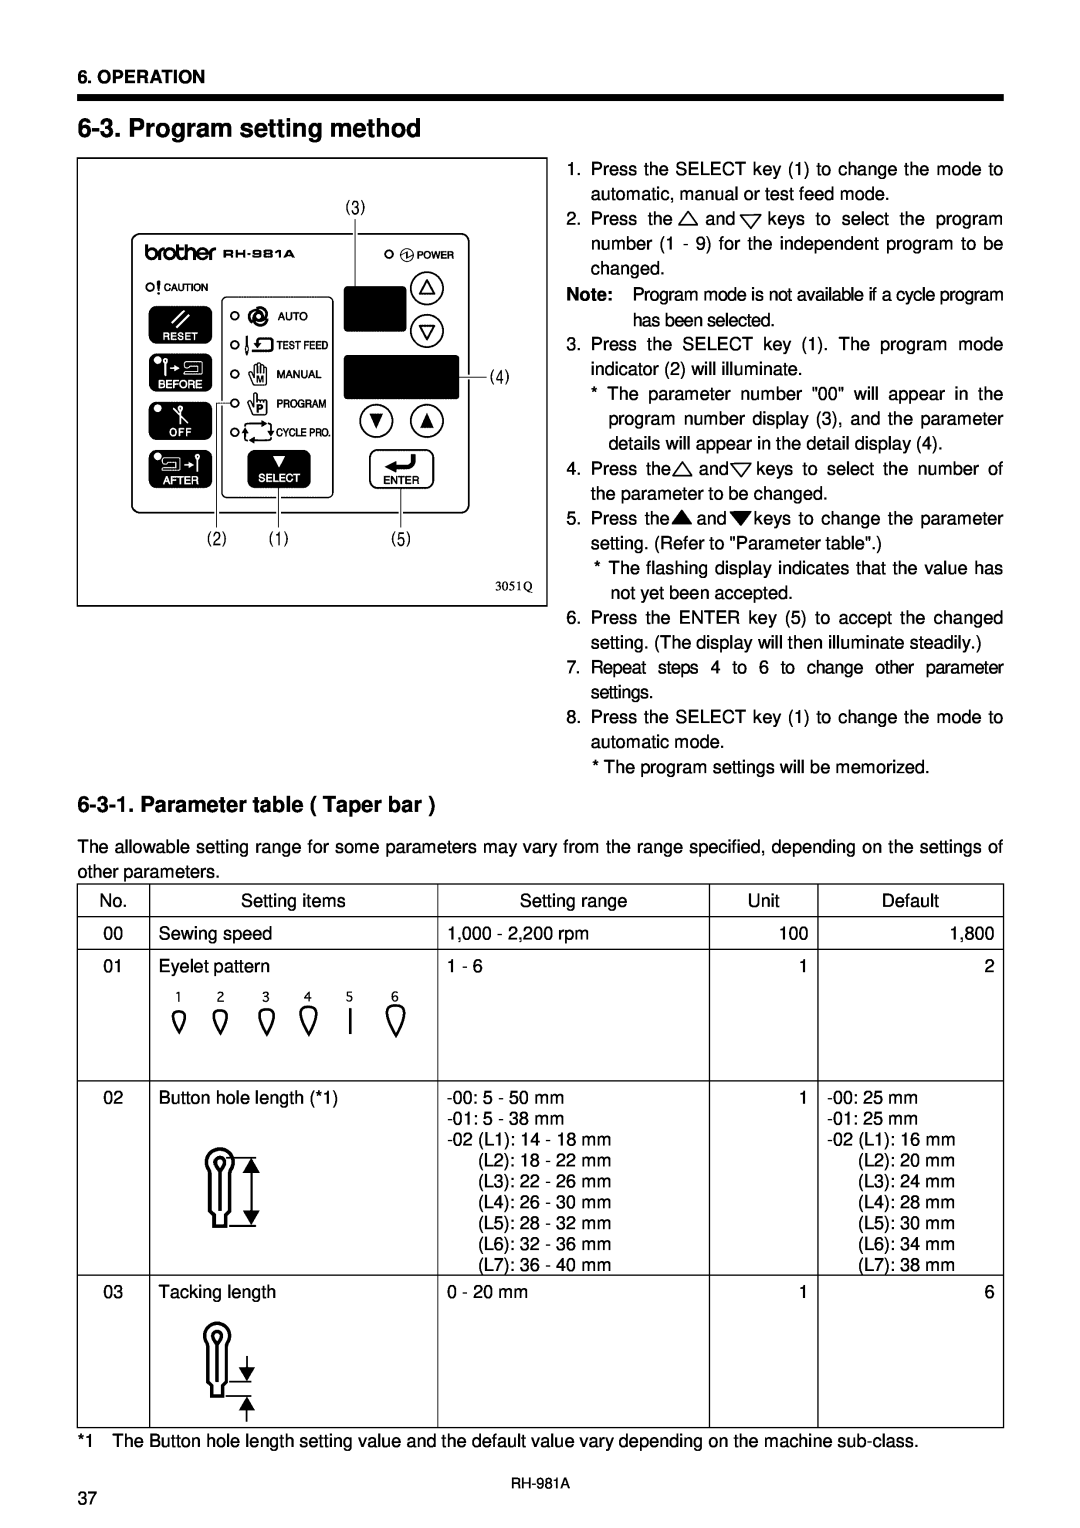 Brother rh-918a manual Program setting method, Parameter table Taper bar 